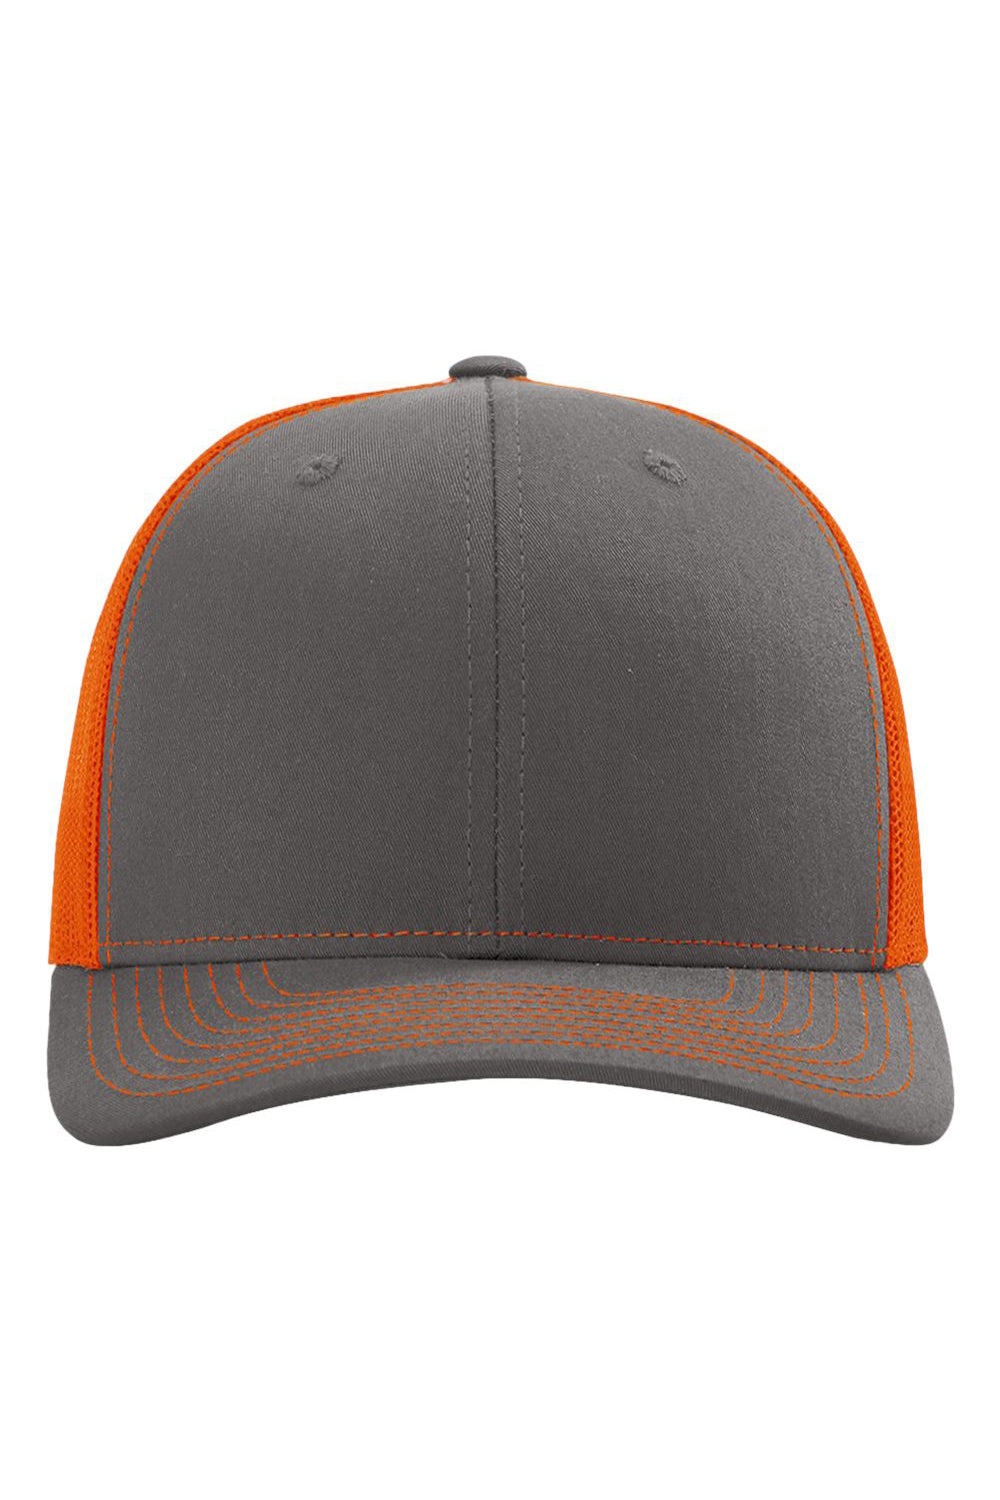 Richardson 112 Mens Snapback Trucker Hat Charcoal Grey/Orange Flat Front